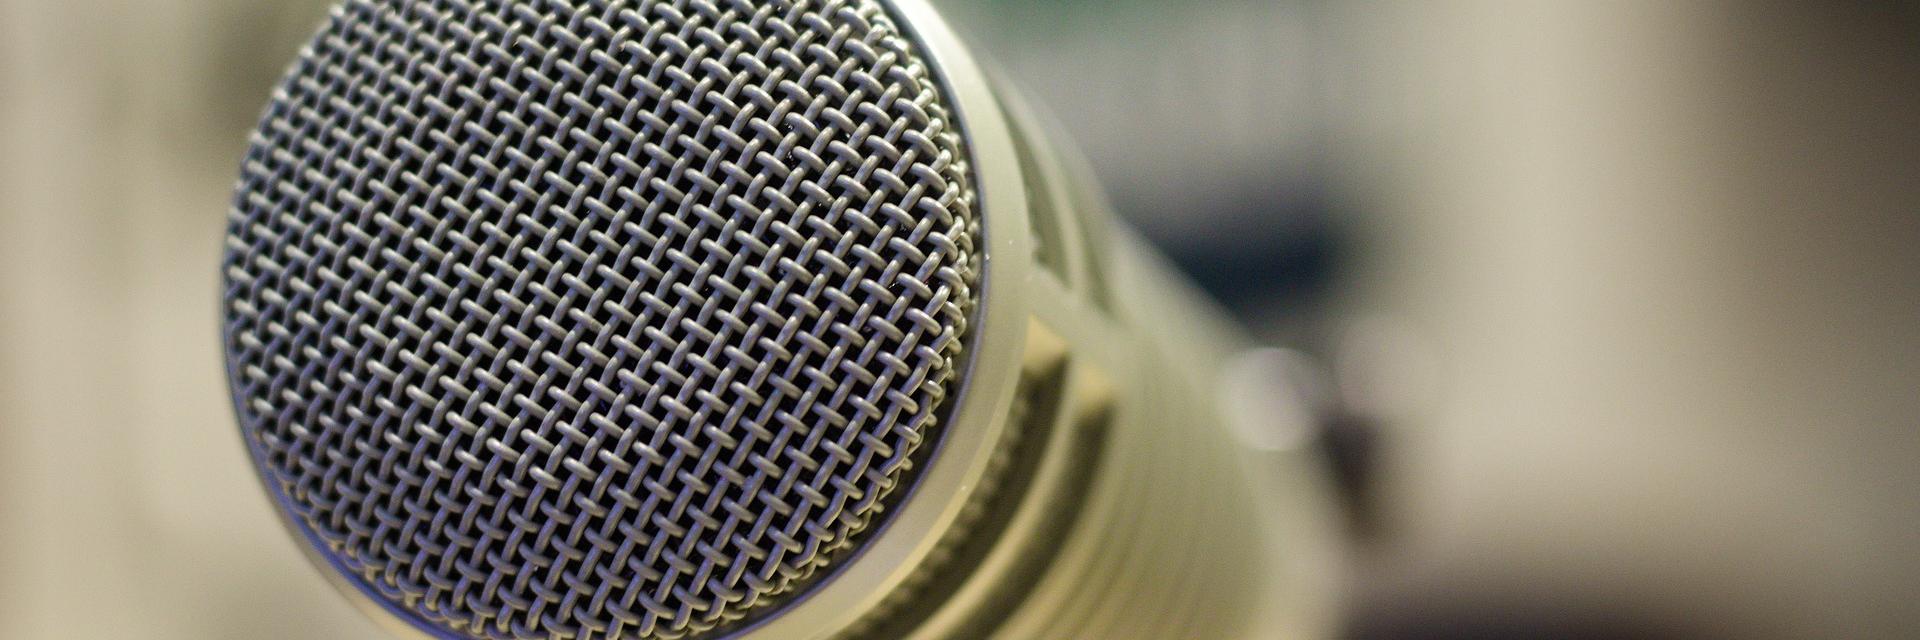 mikrofon-4250217_1920_Pixabay (c) Pixabay